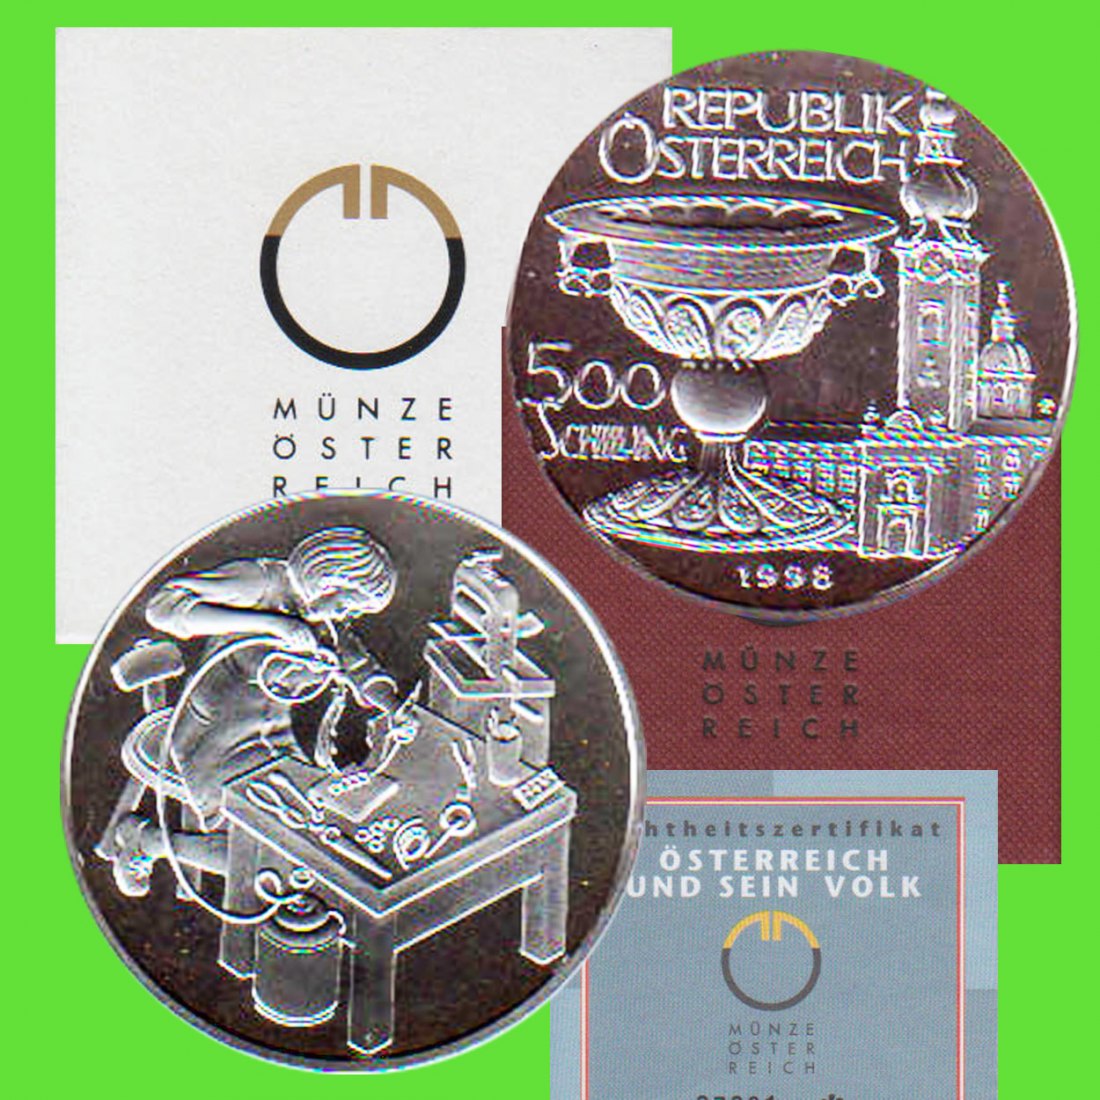  Offiz. 500-öS-Silbermünze Österreich *Goldschmied* 1998 *PP* max 50.000St!   